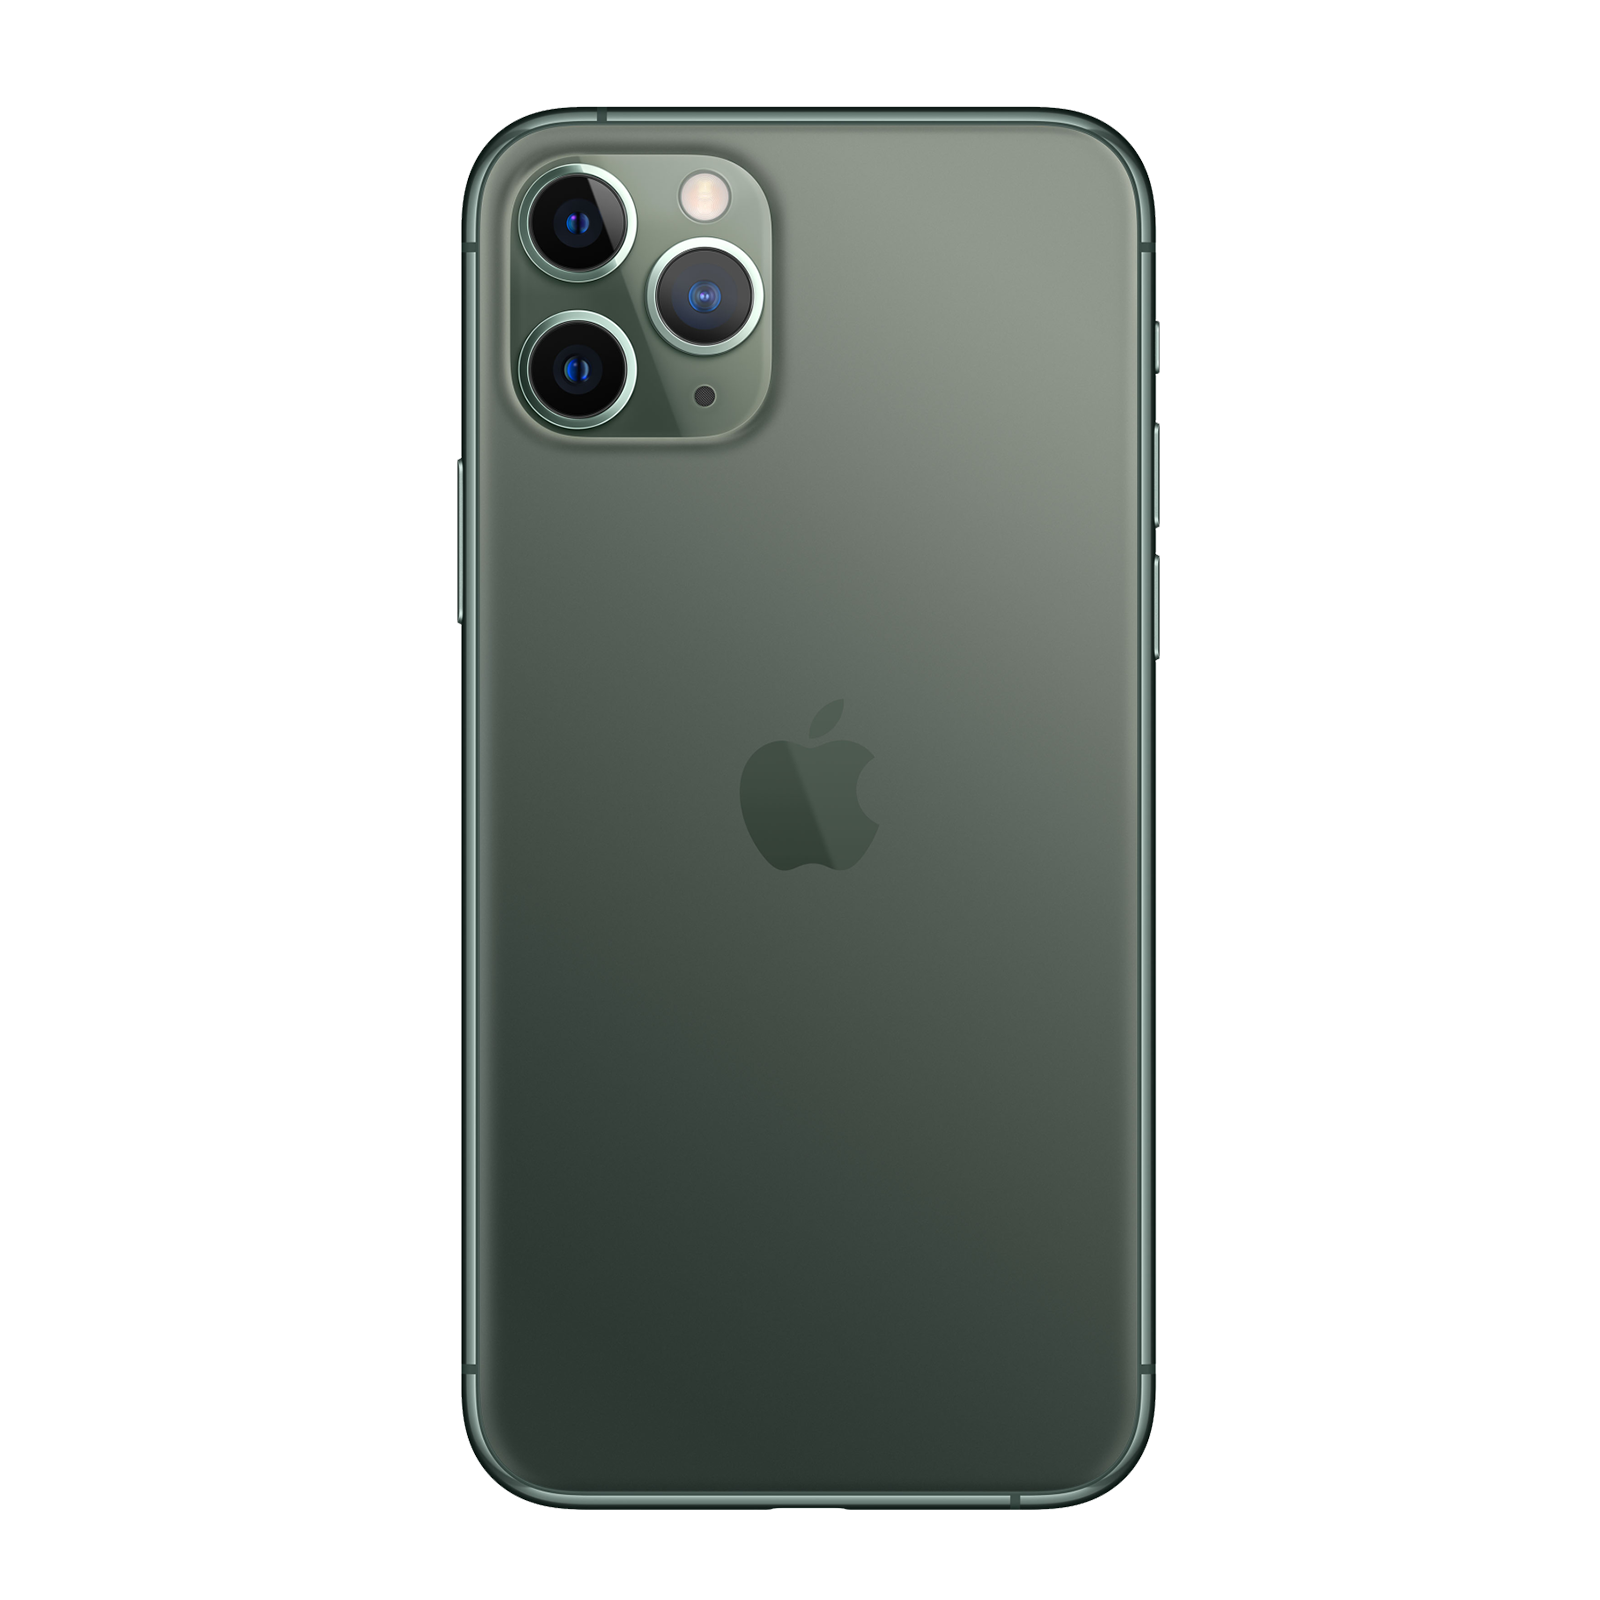 Apple iPhone 11 Pro 256GB Midnight Green Very Good - Unlocked